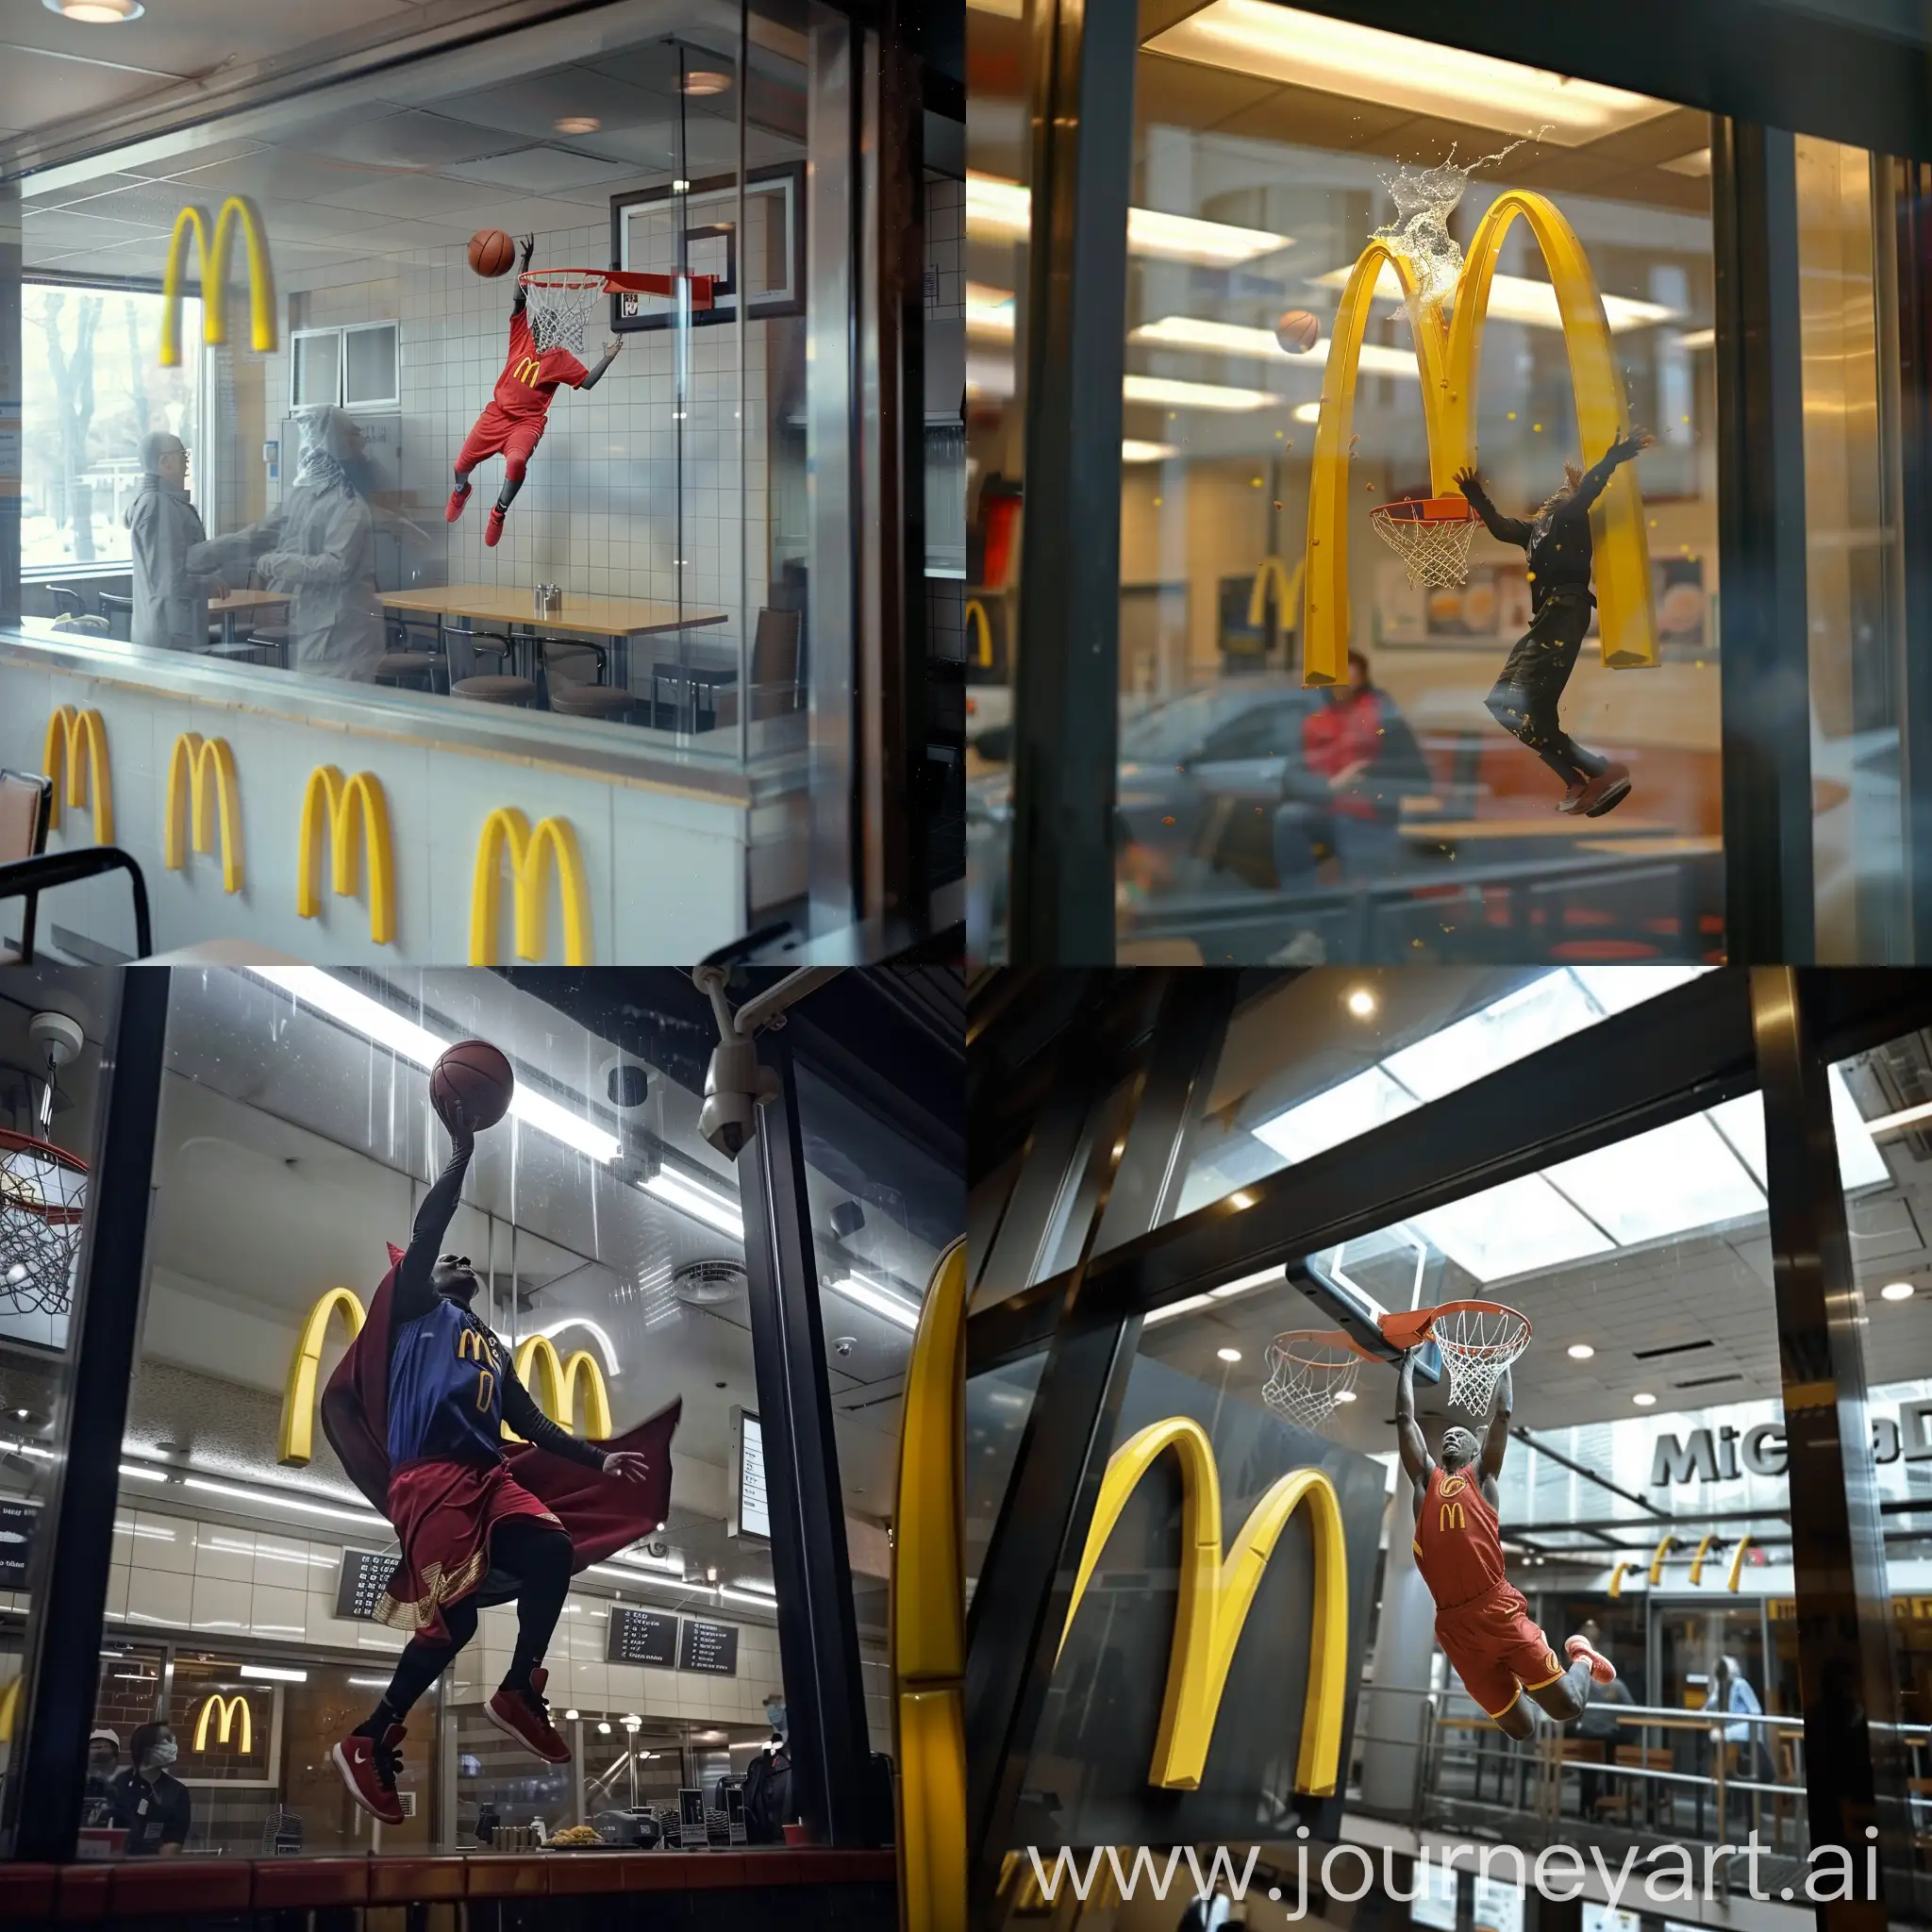 a wizard playing basketball inside mcdonals restaurant cctv footage 